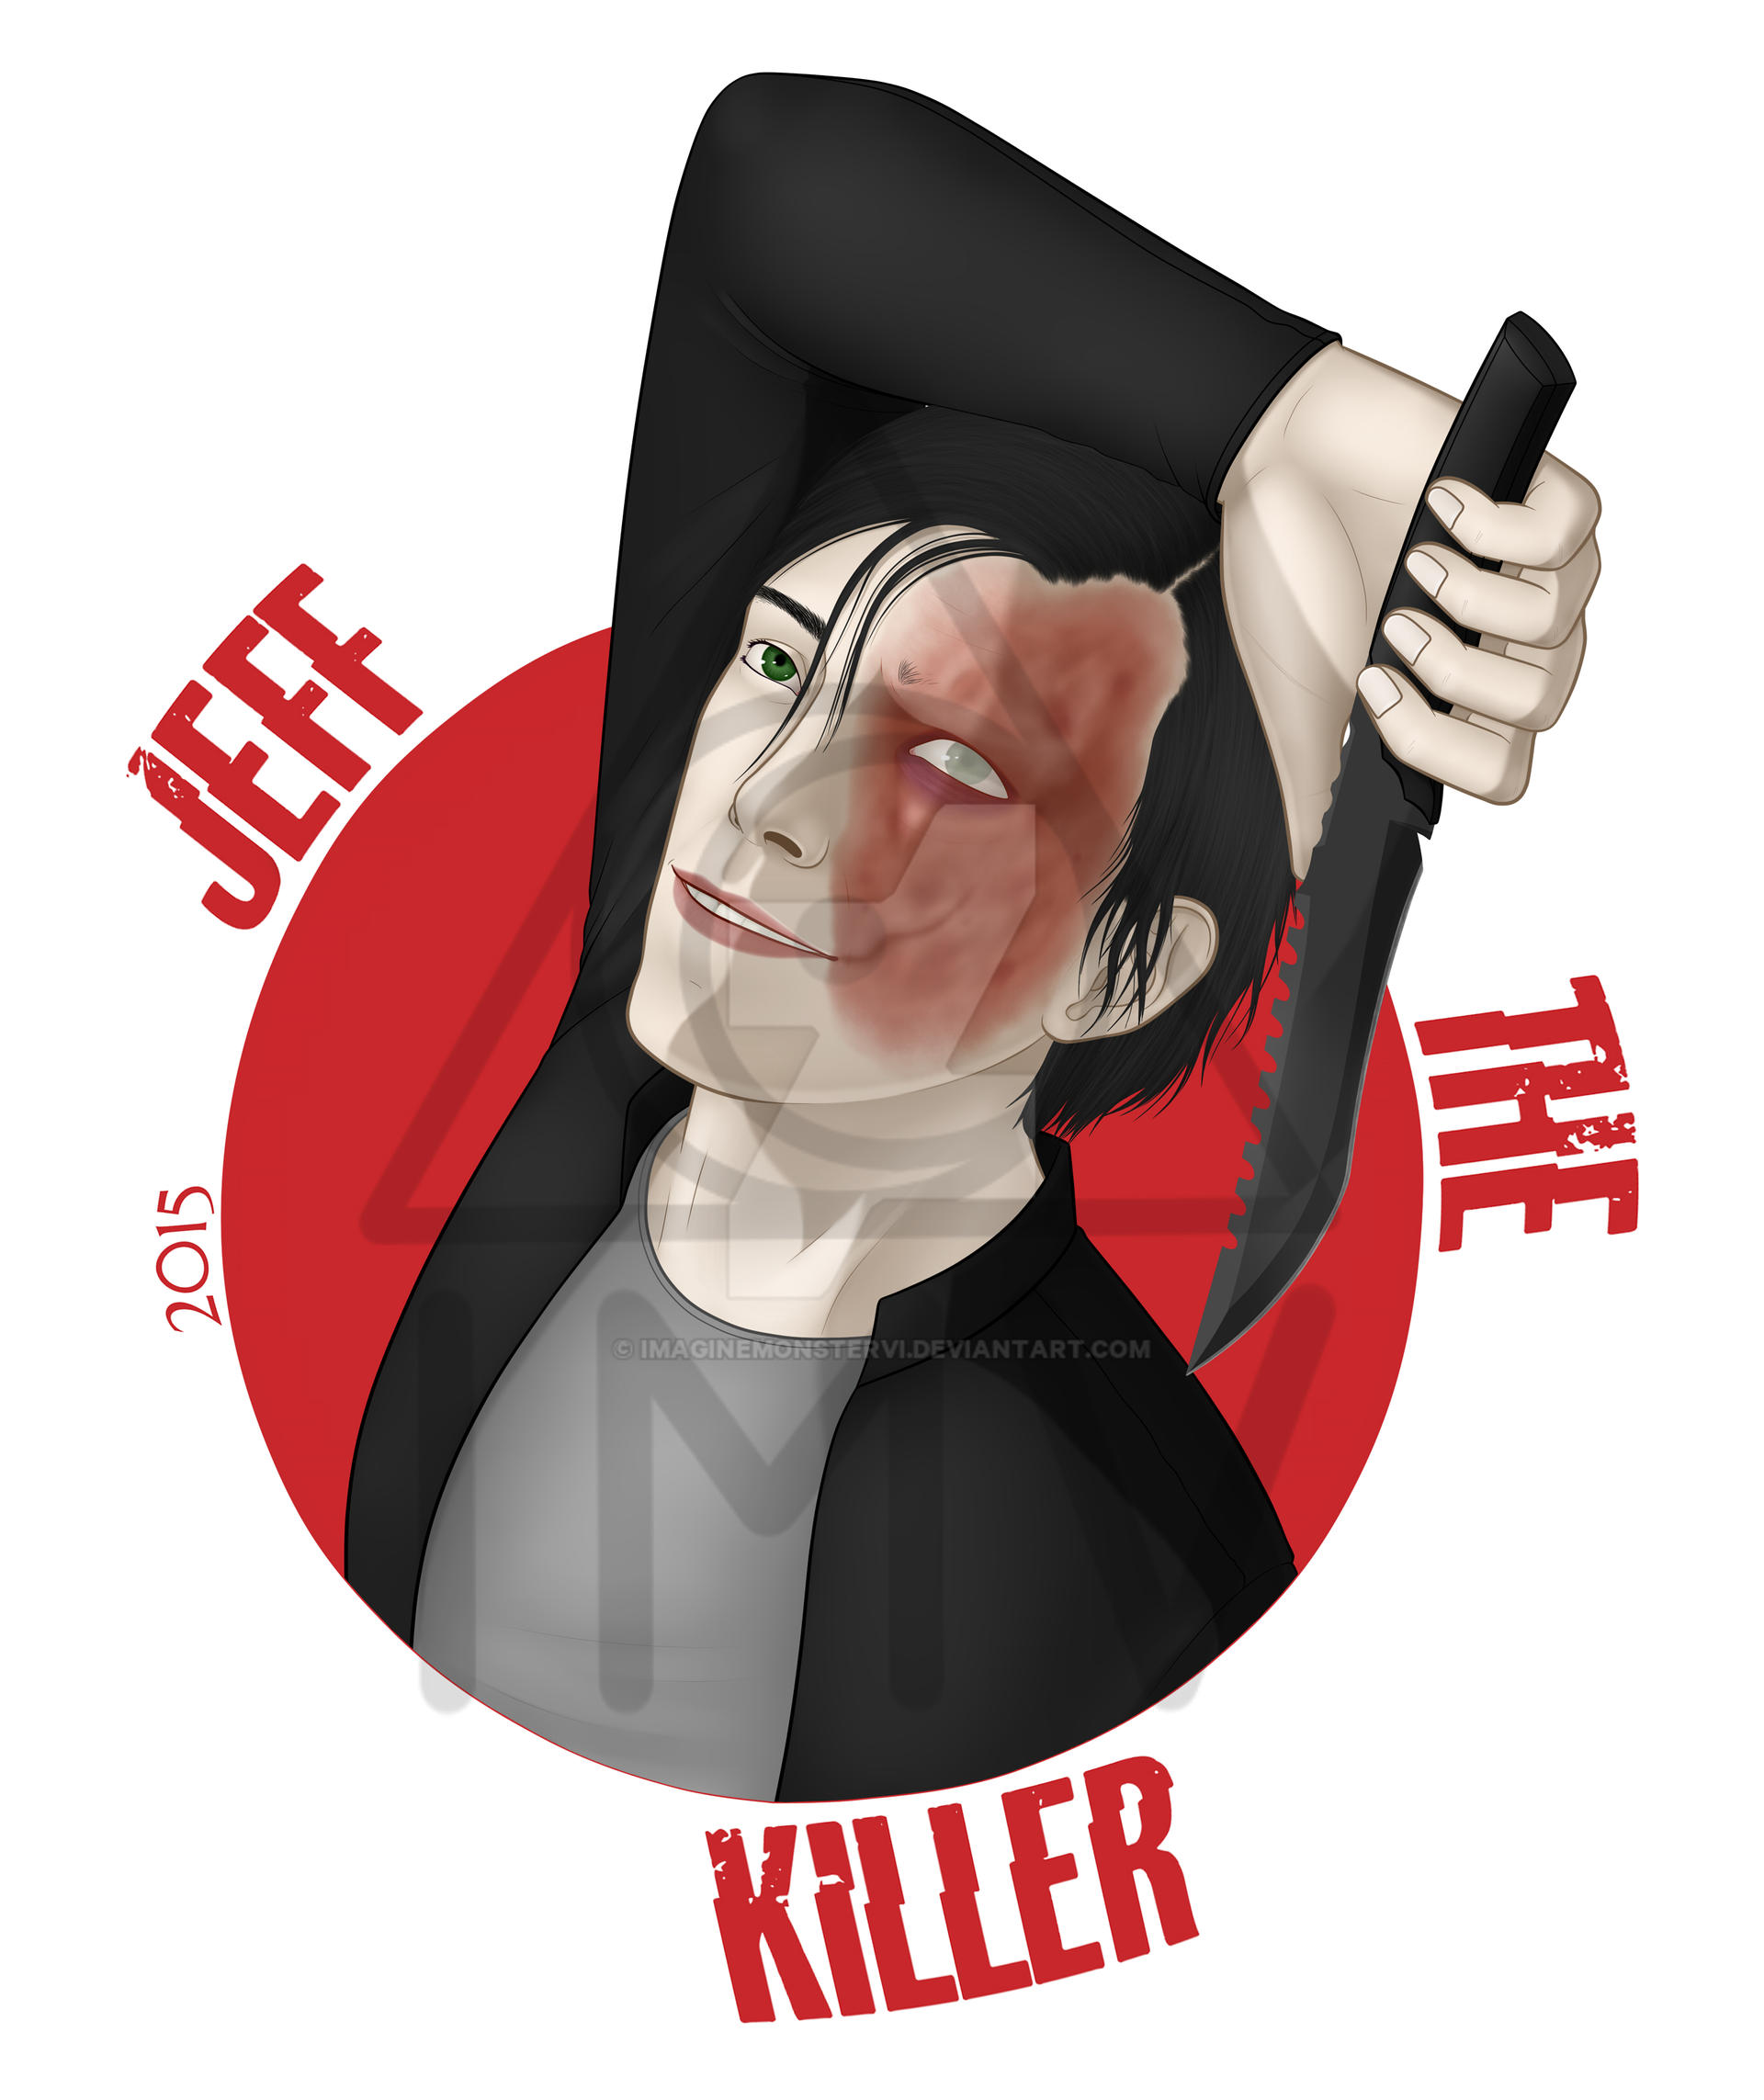 Jeff the killer : r/CreepyPastas